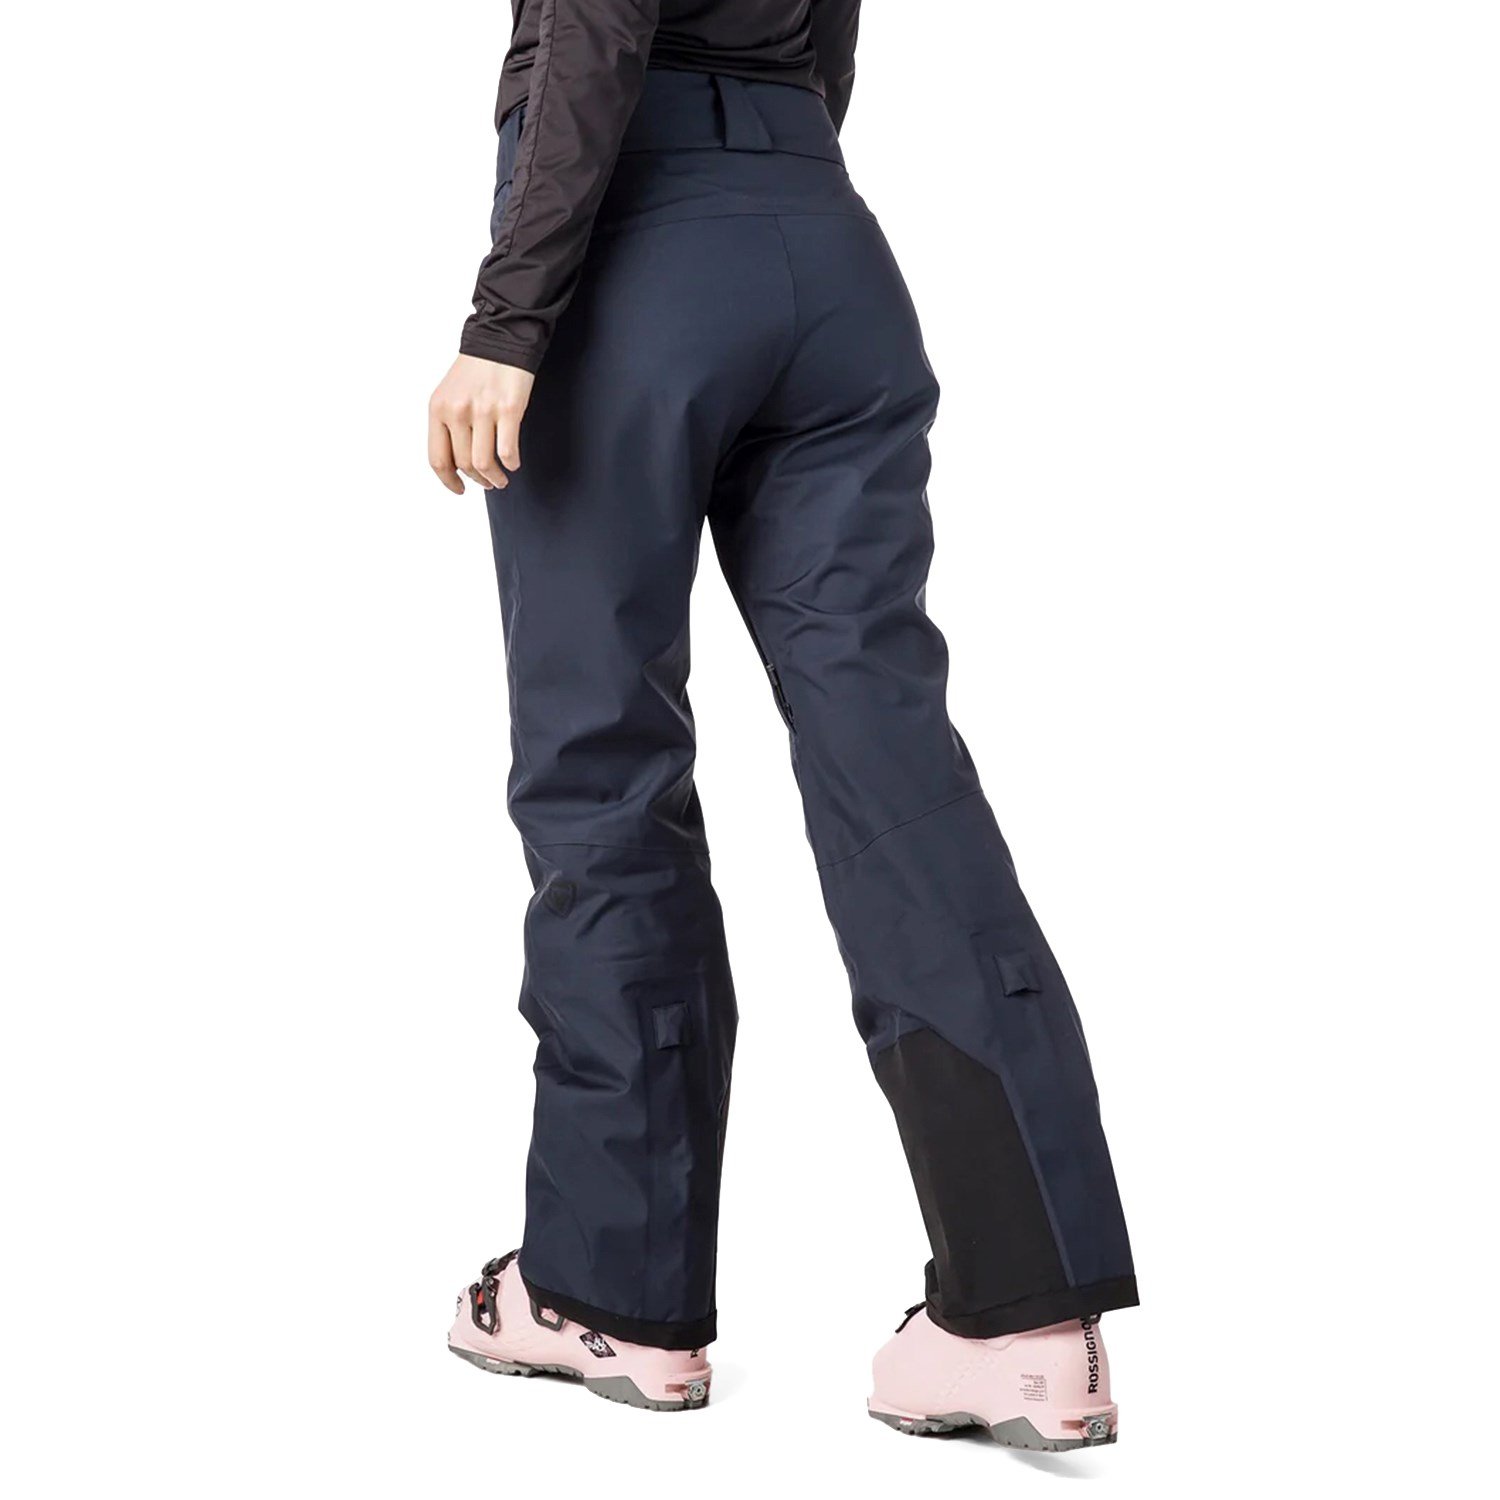 Rossignol SKPR 3L Pant - Pantalones de esquí - Mujer